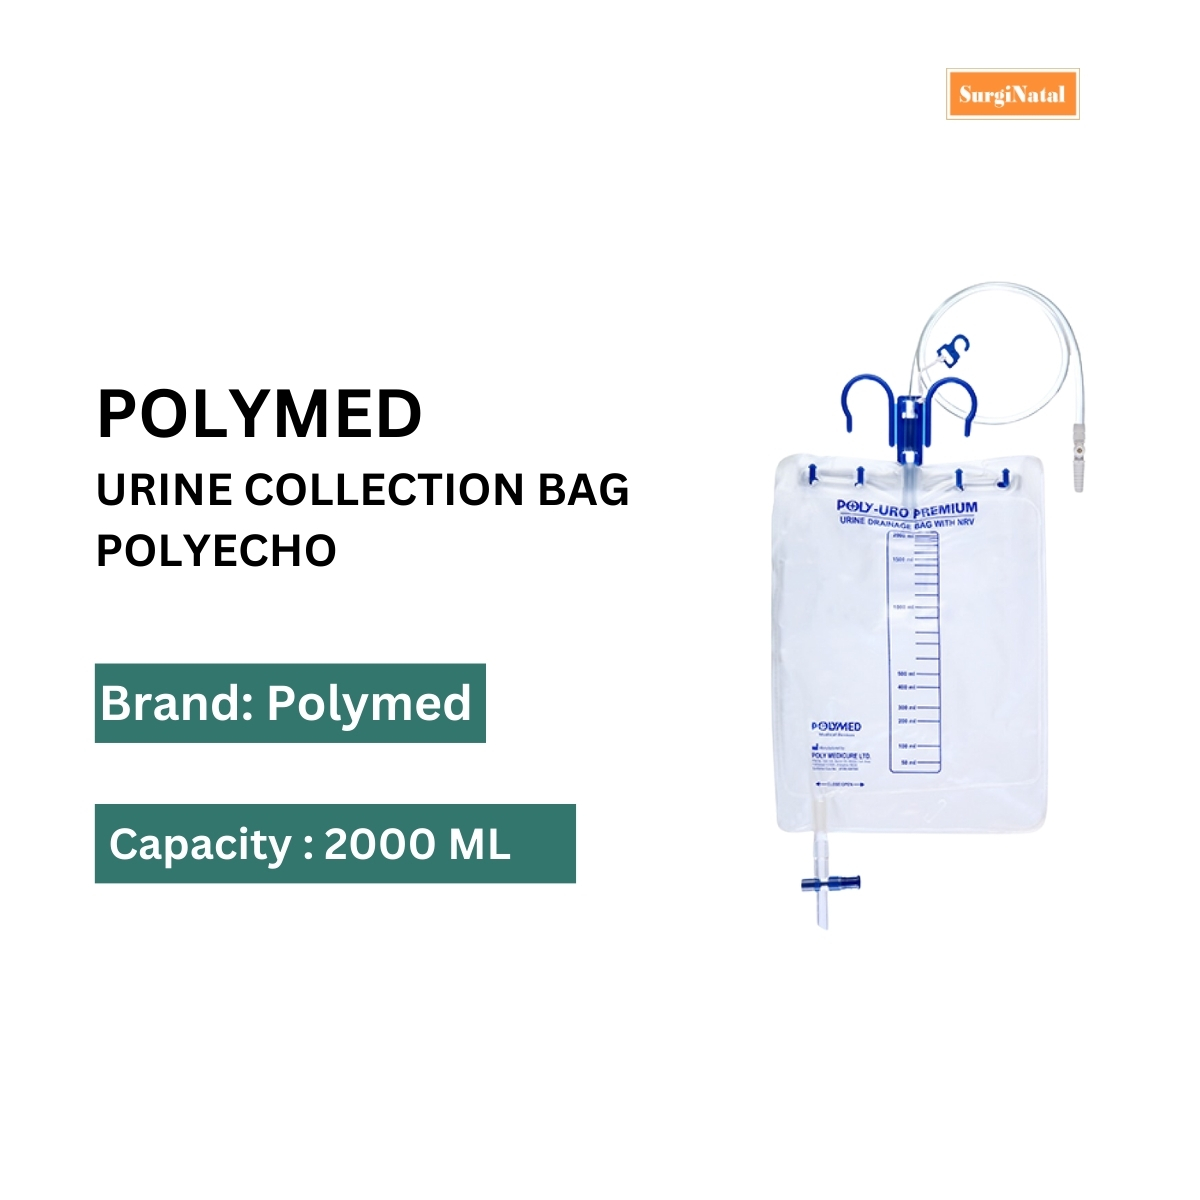  polymed urine collection bag